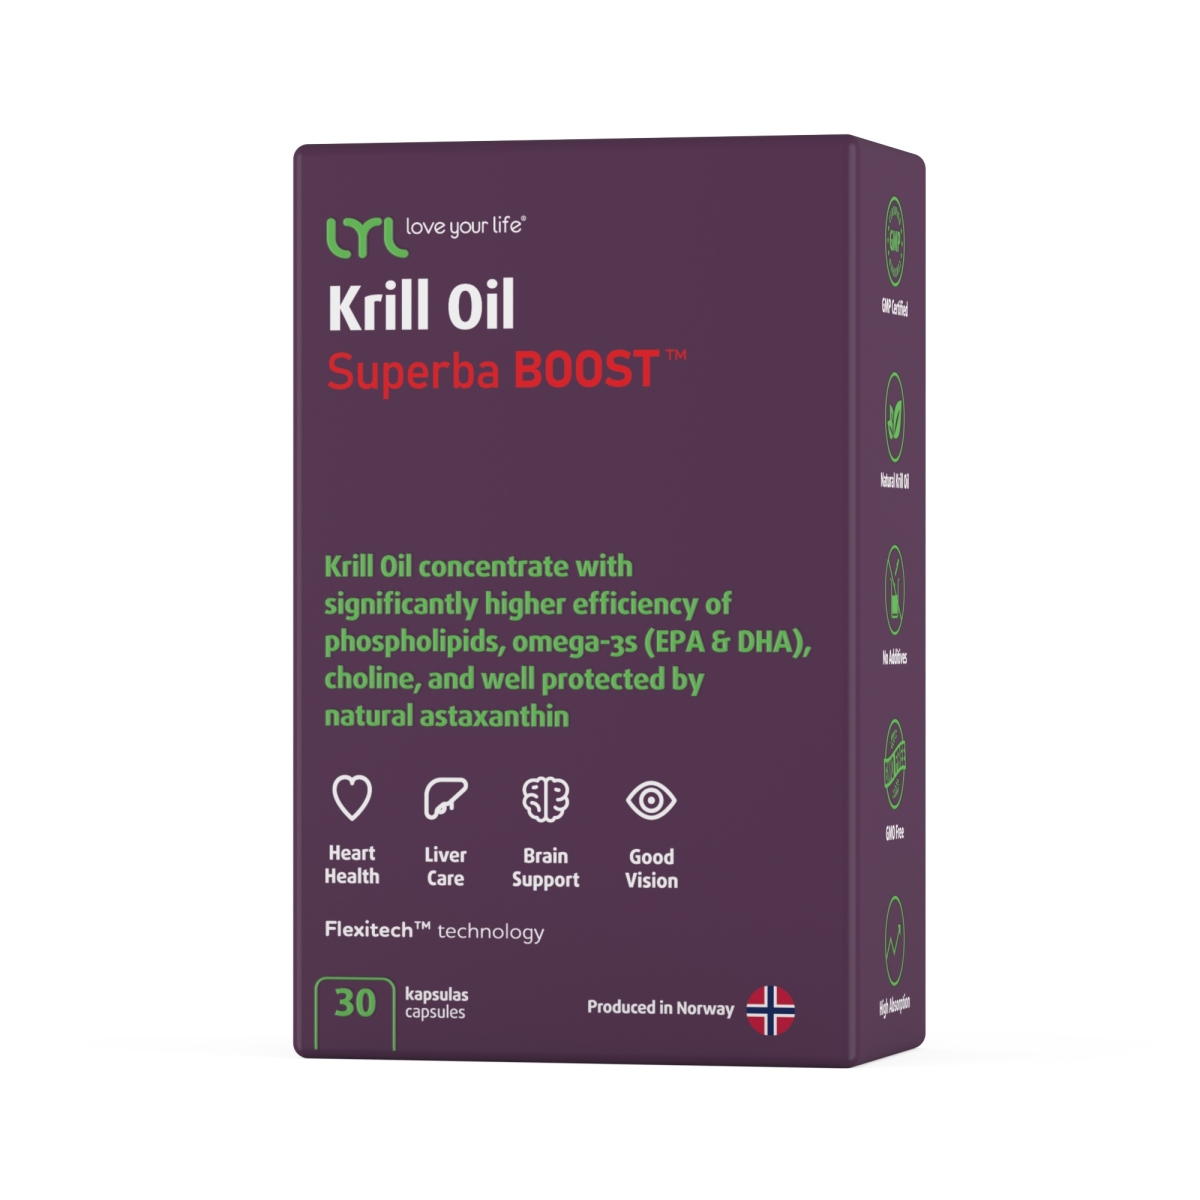 LYL Krill Oil Superba BOOST, 30 kapsulas